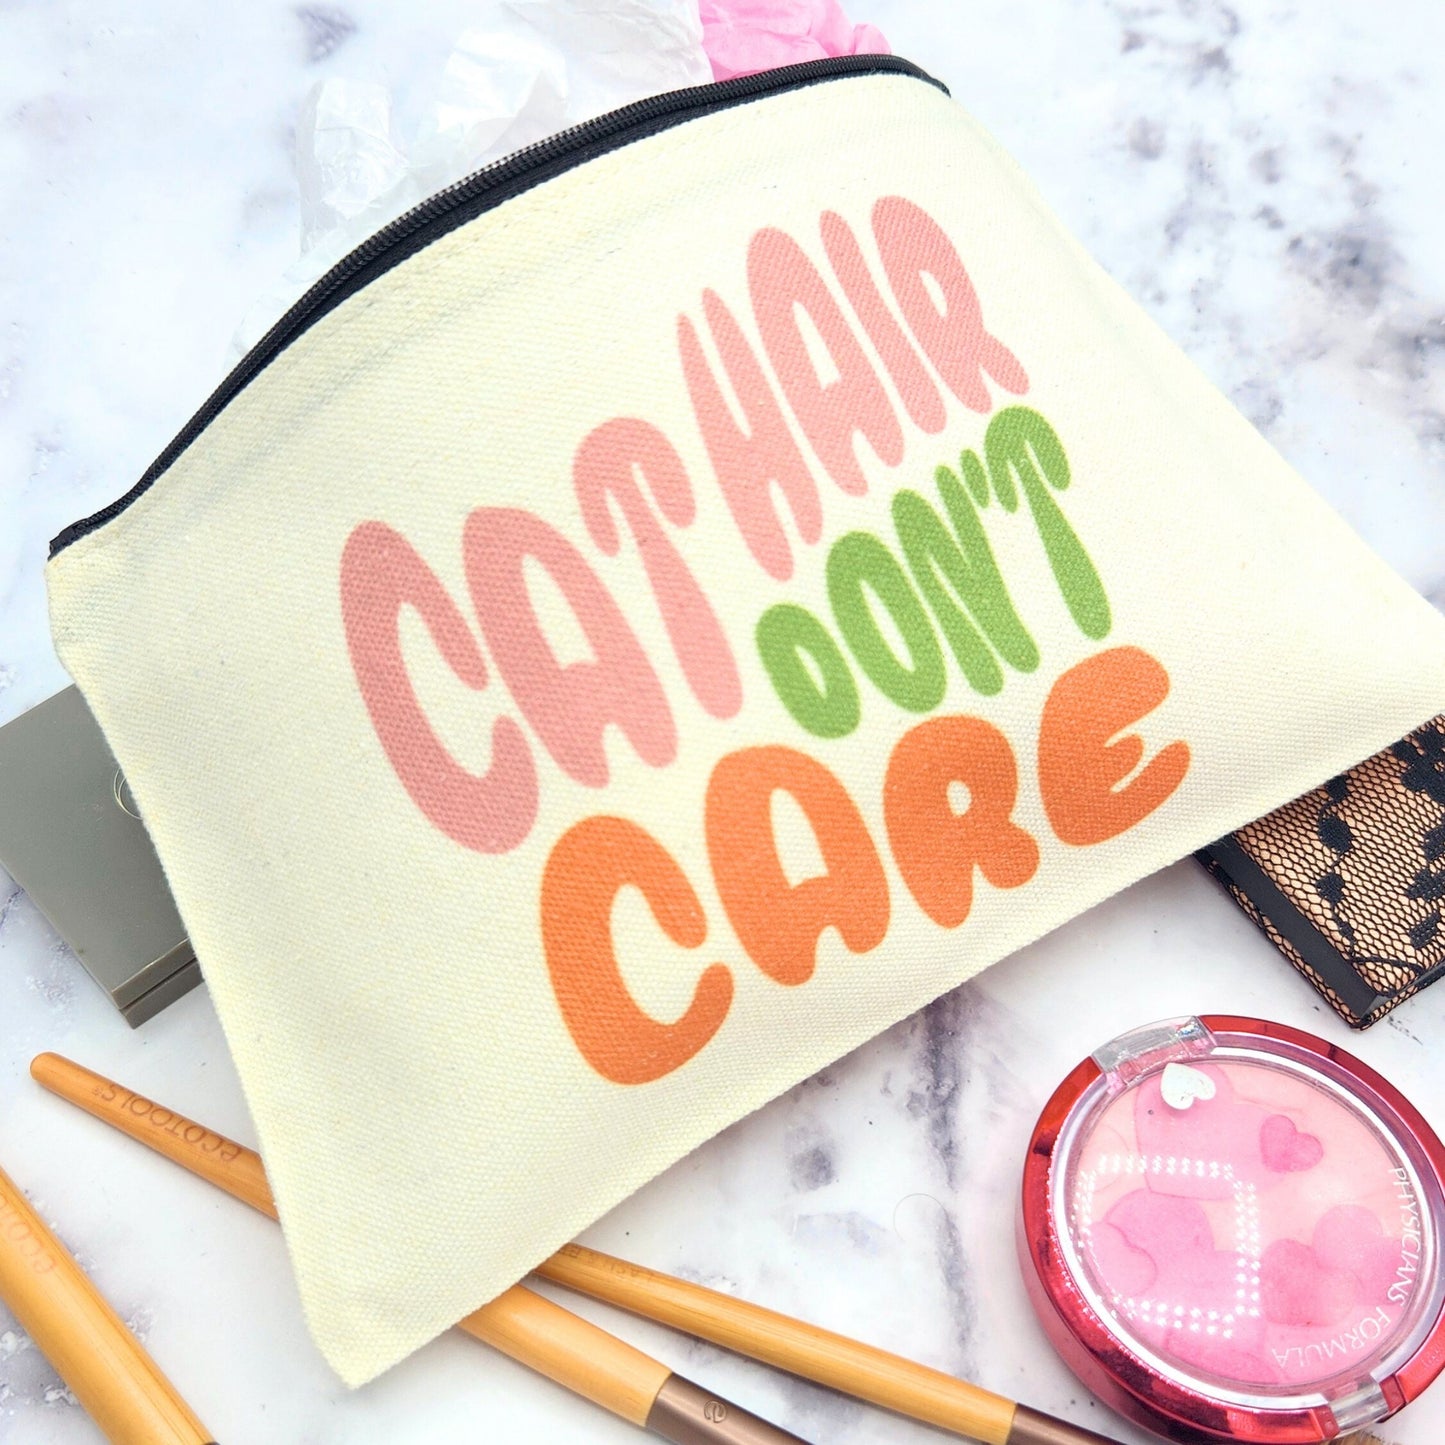 Cat Hair Don't Care - Makeup & Cosmetic Bag